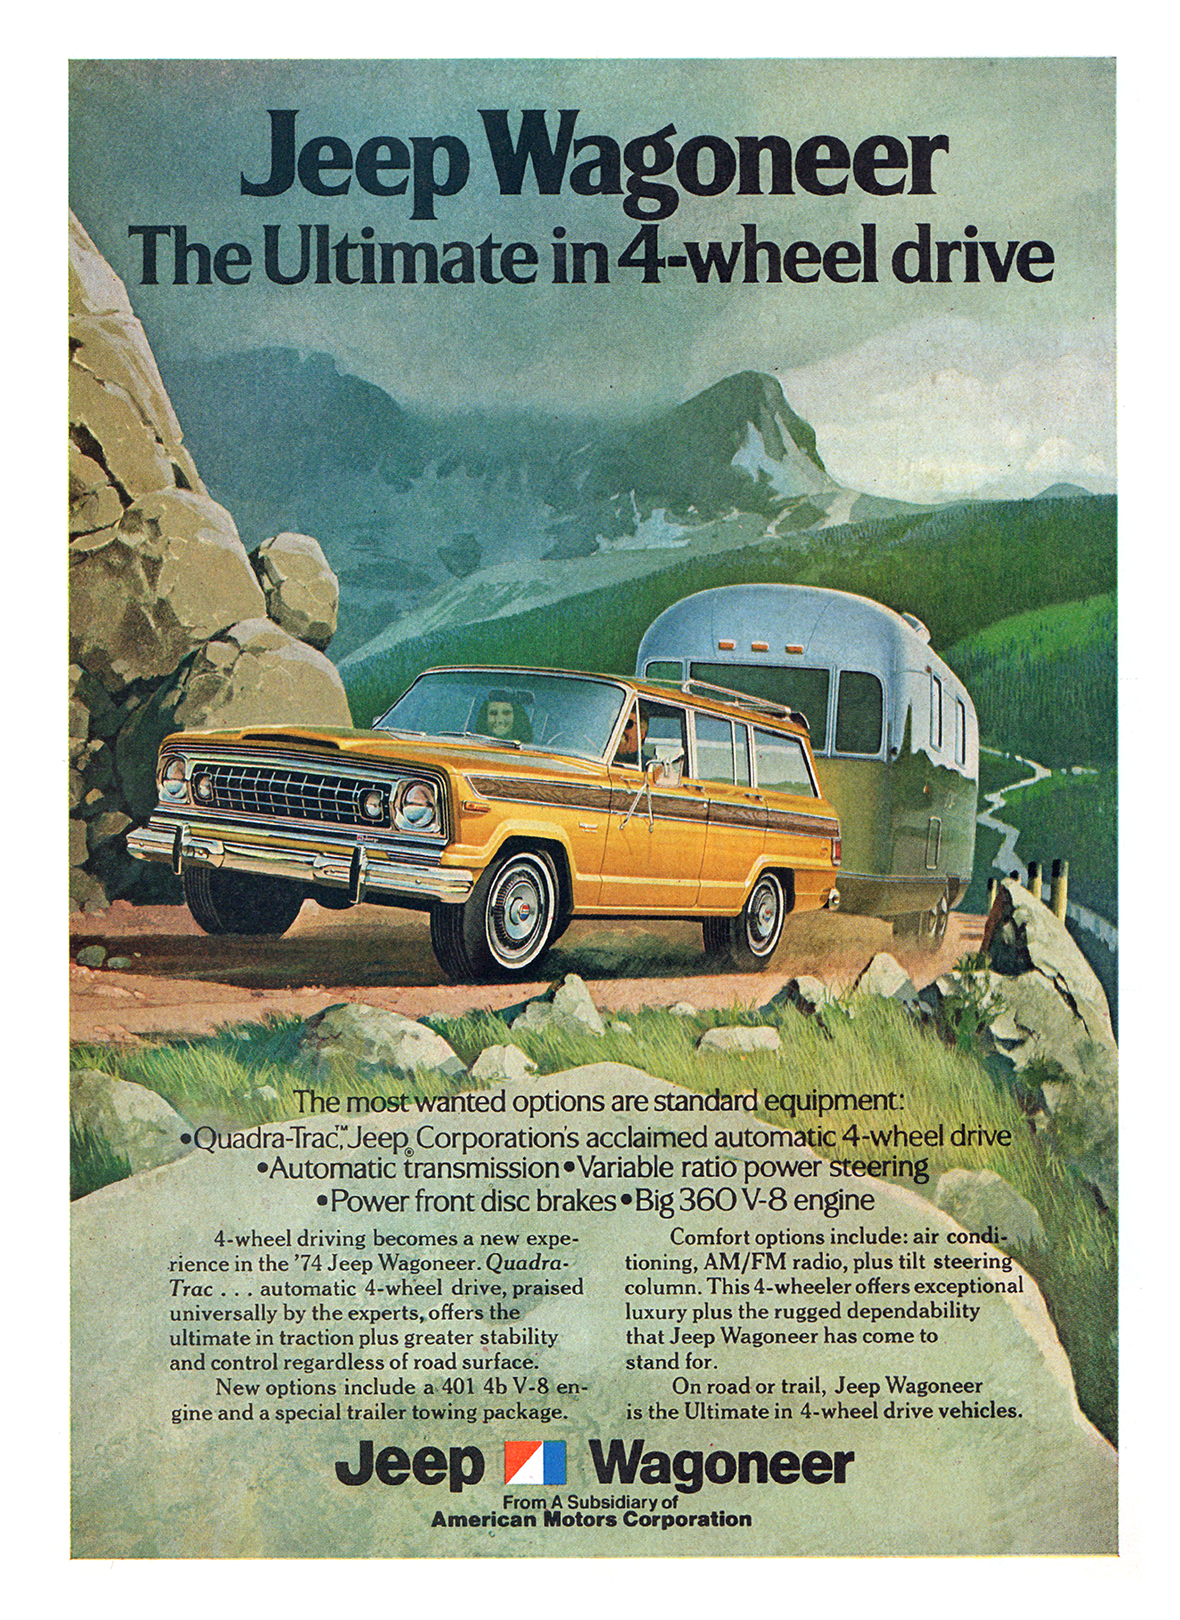 '74 Jeep Wagoneer Ad (November, 1973) – The Ultimate in 4-wheel drive